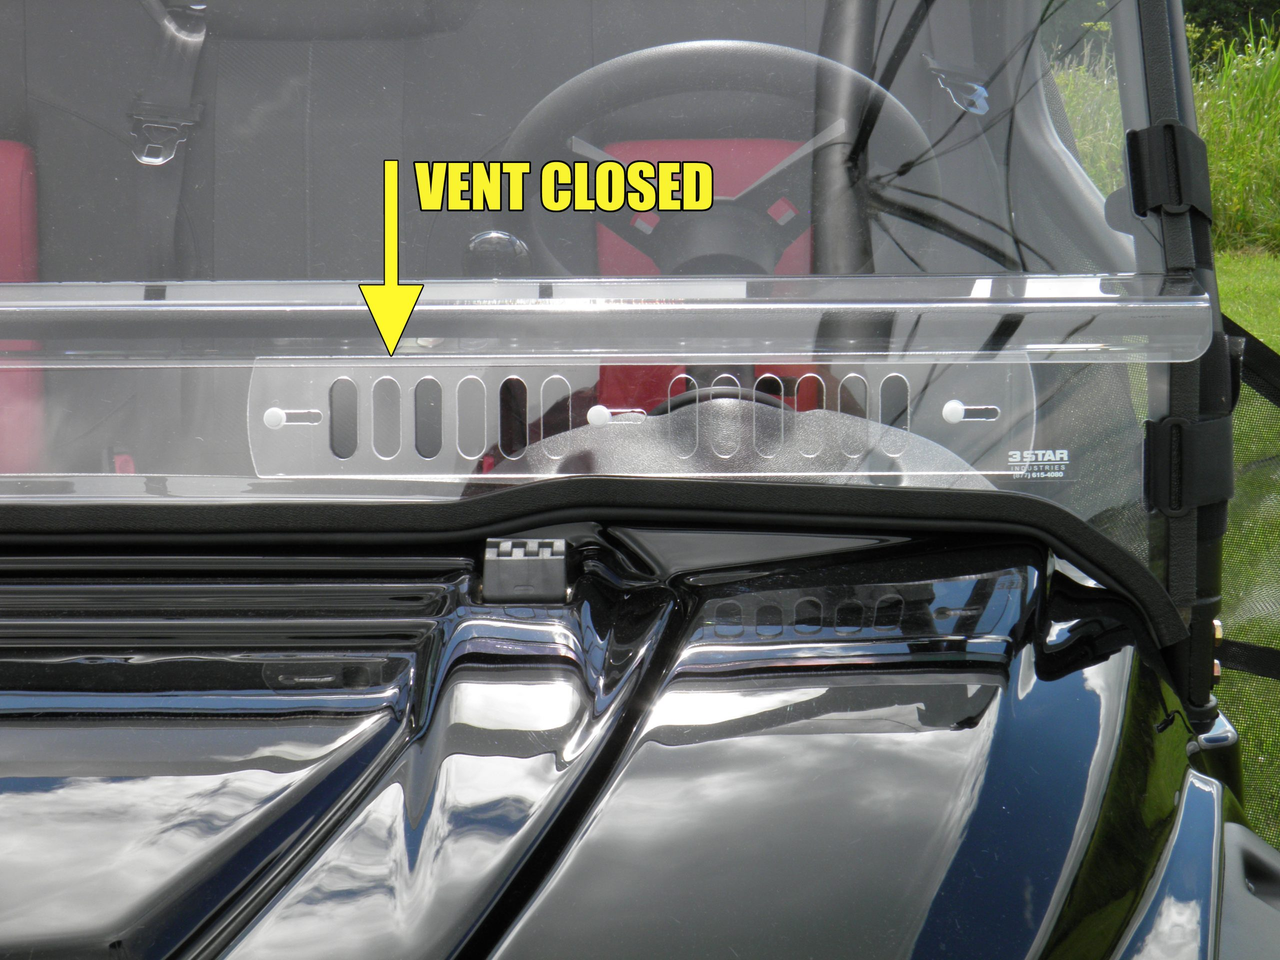 3 Star side x side Honda Talon 1000-2 windshield vents closed